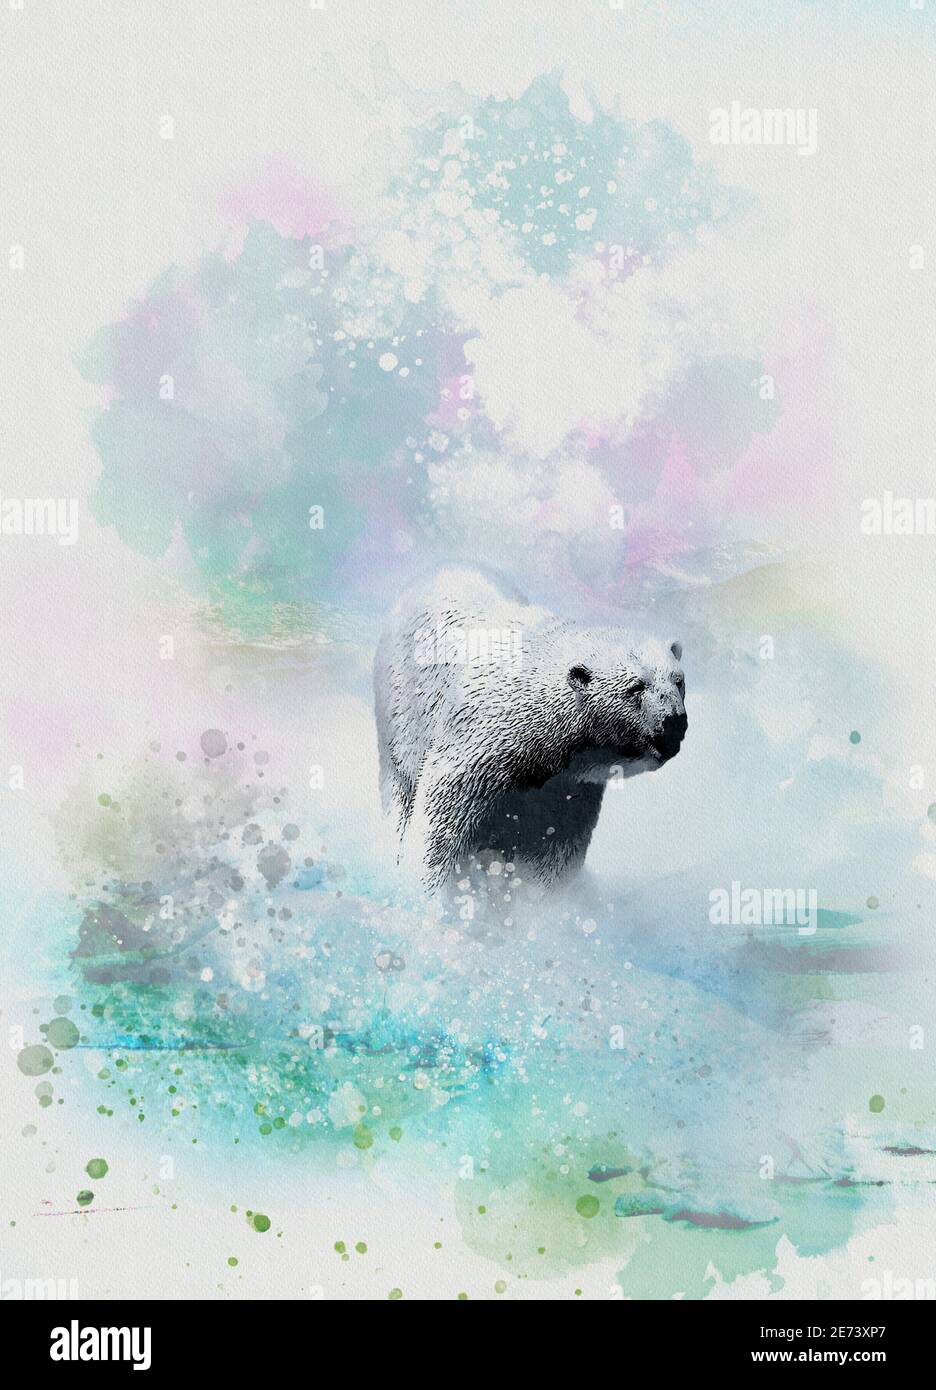 Polar bear, illustration Stock Photo